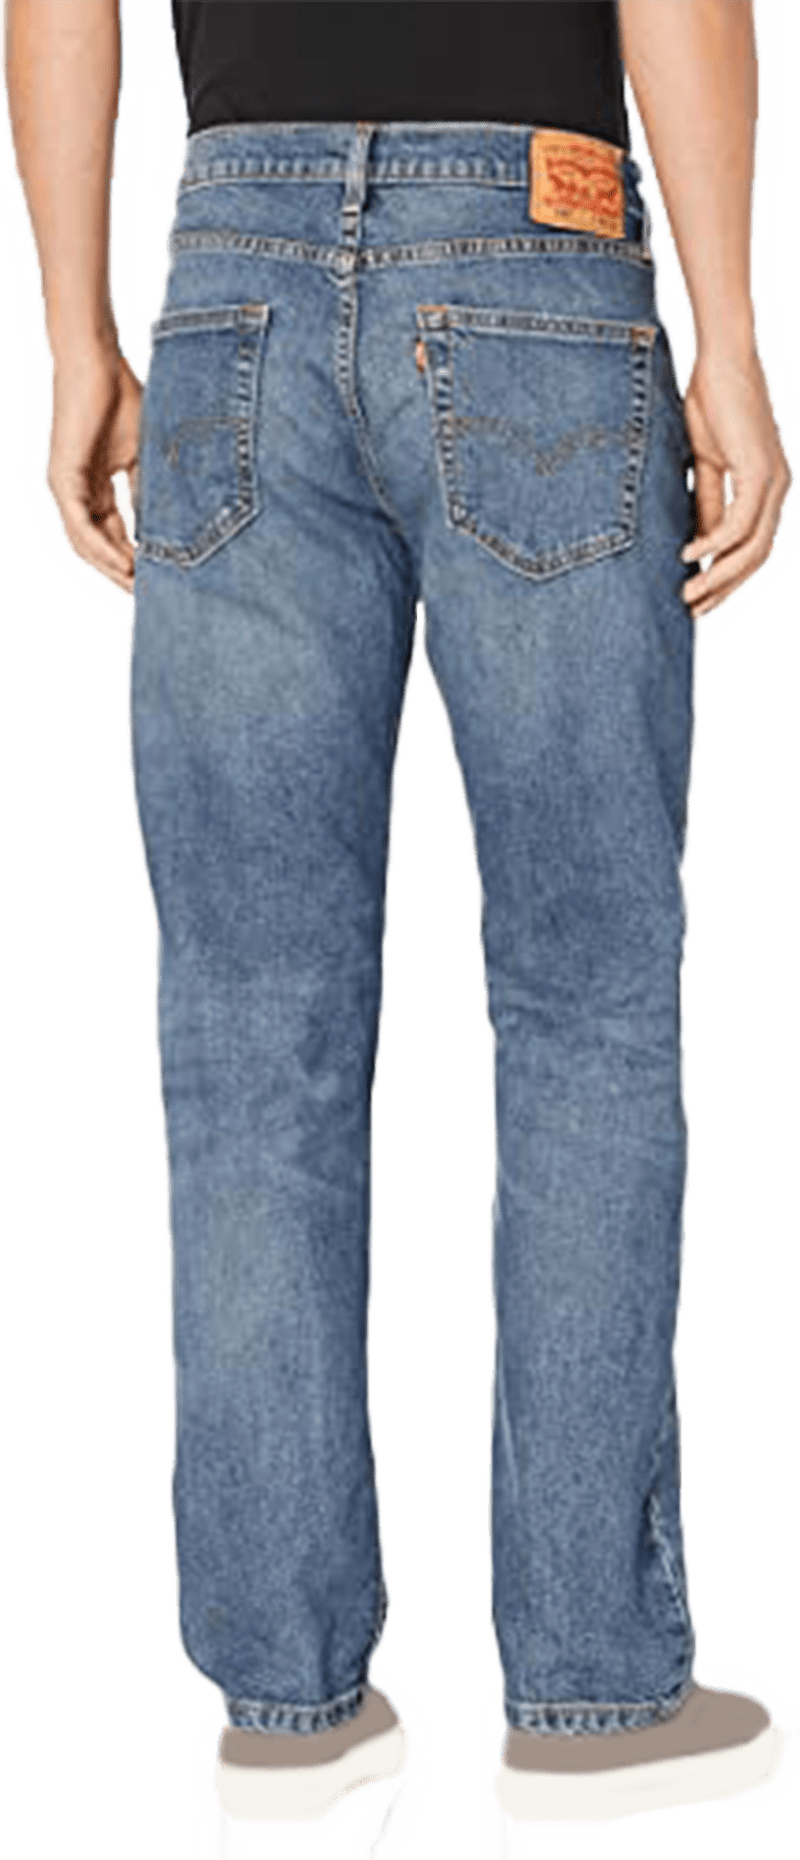 Levi Strauss Men's 514 Straight Fit Flex Jeans